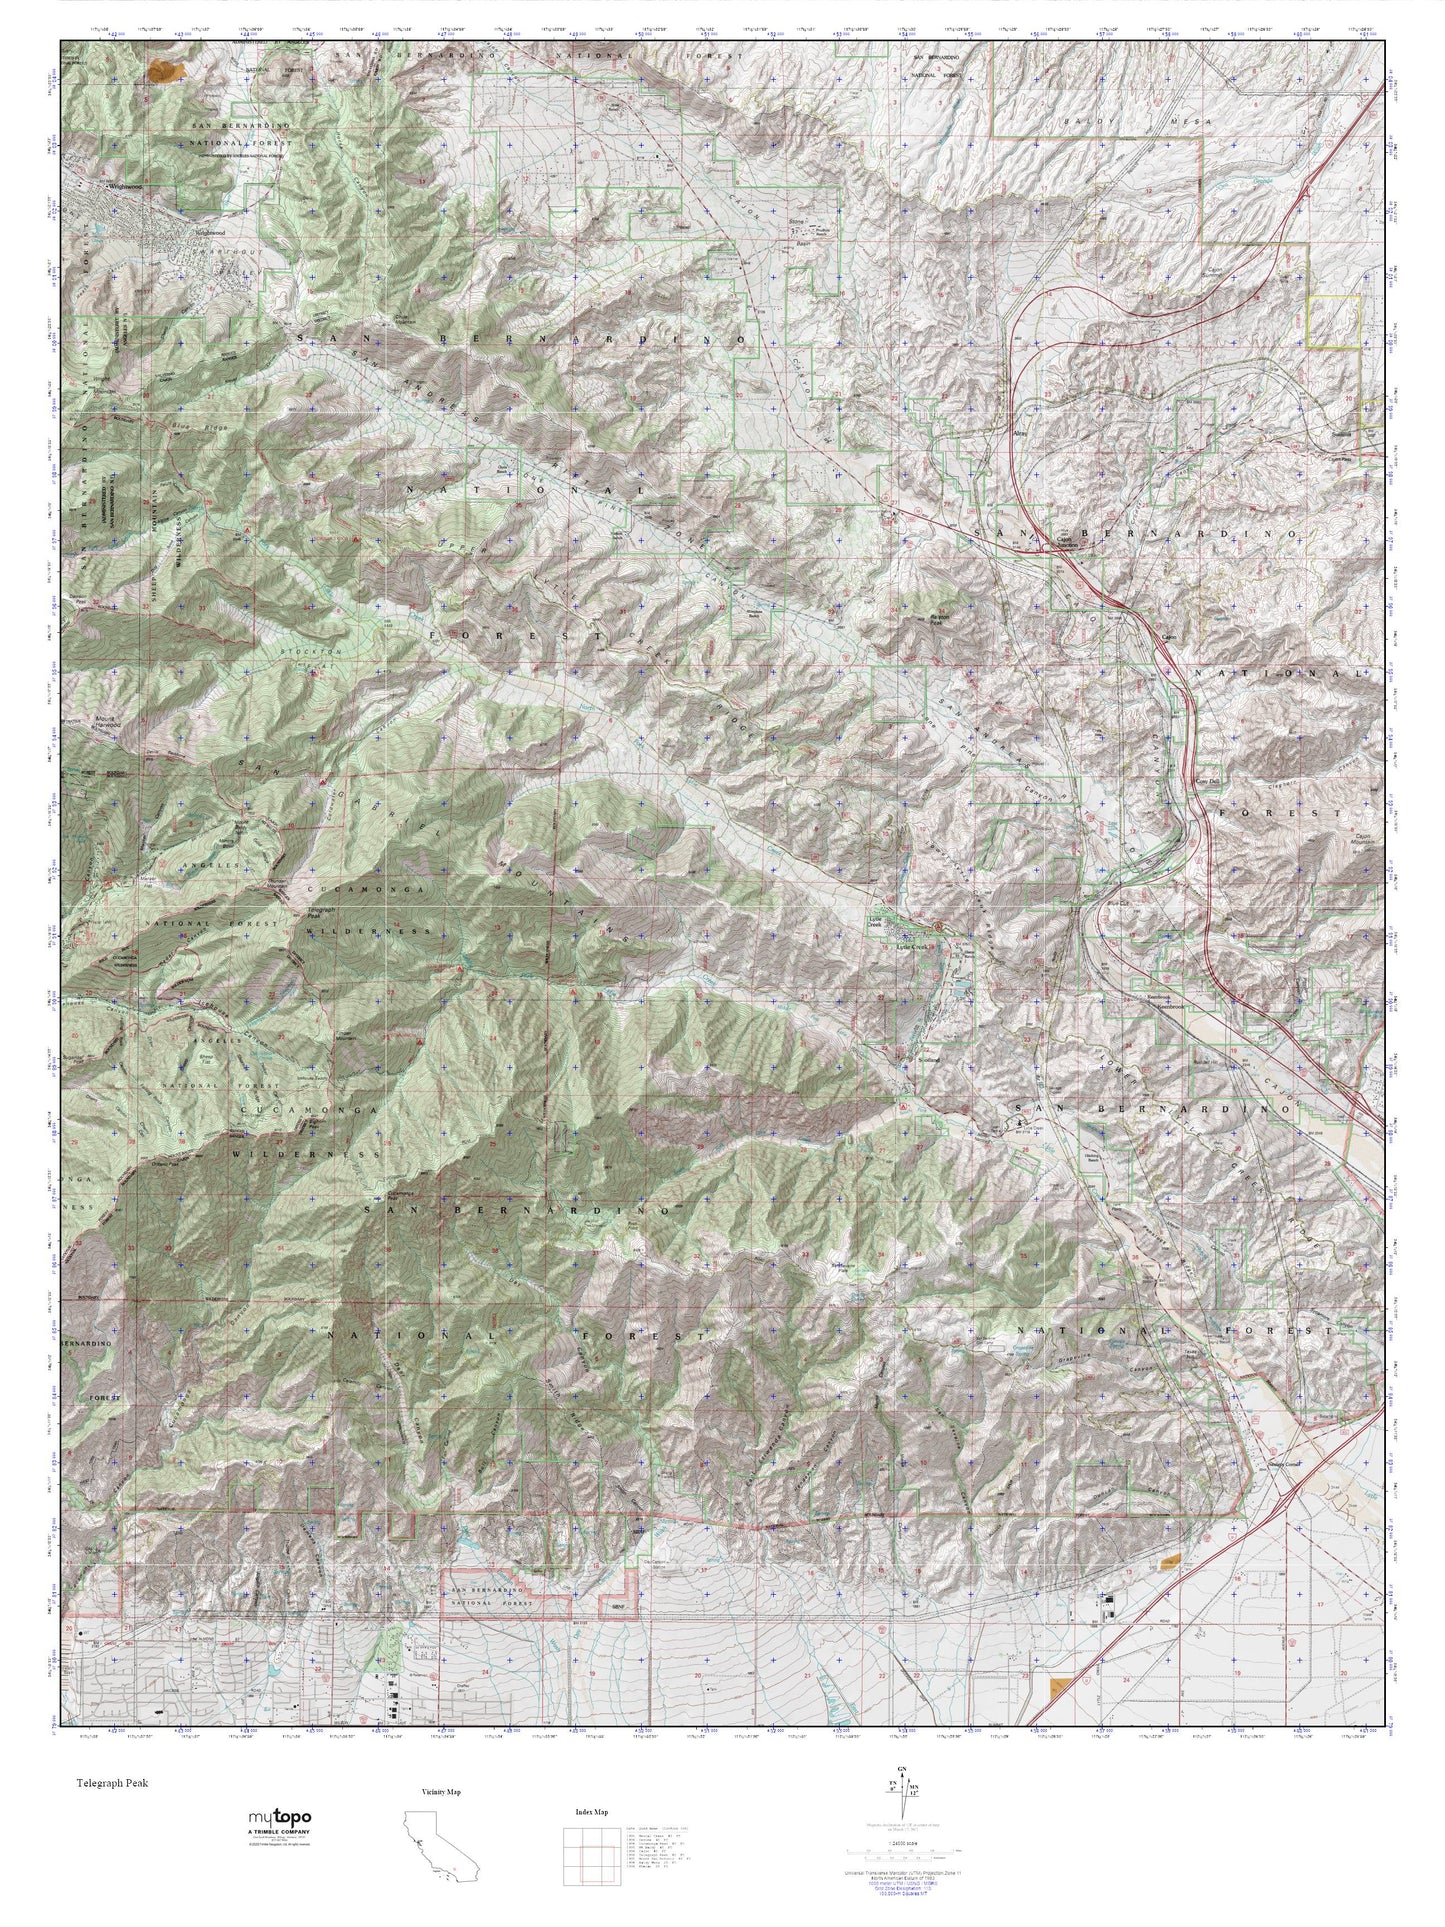 Lytle Creek MyTopo Explorer Series Map Image